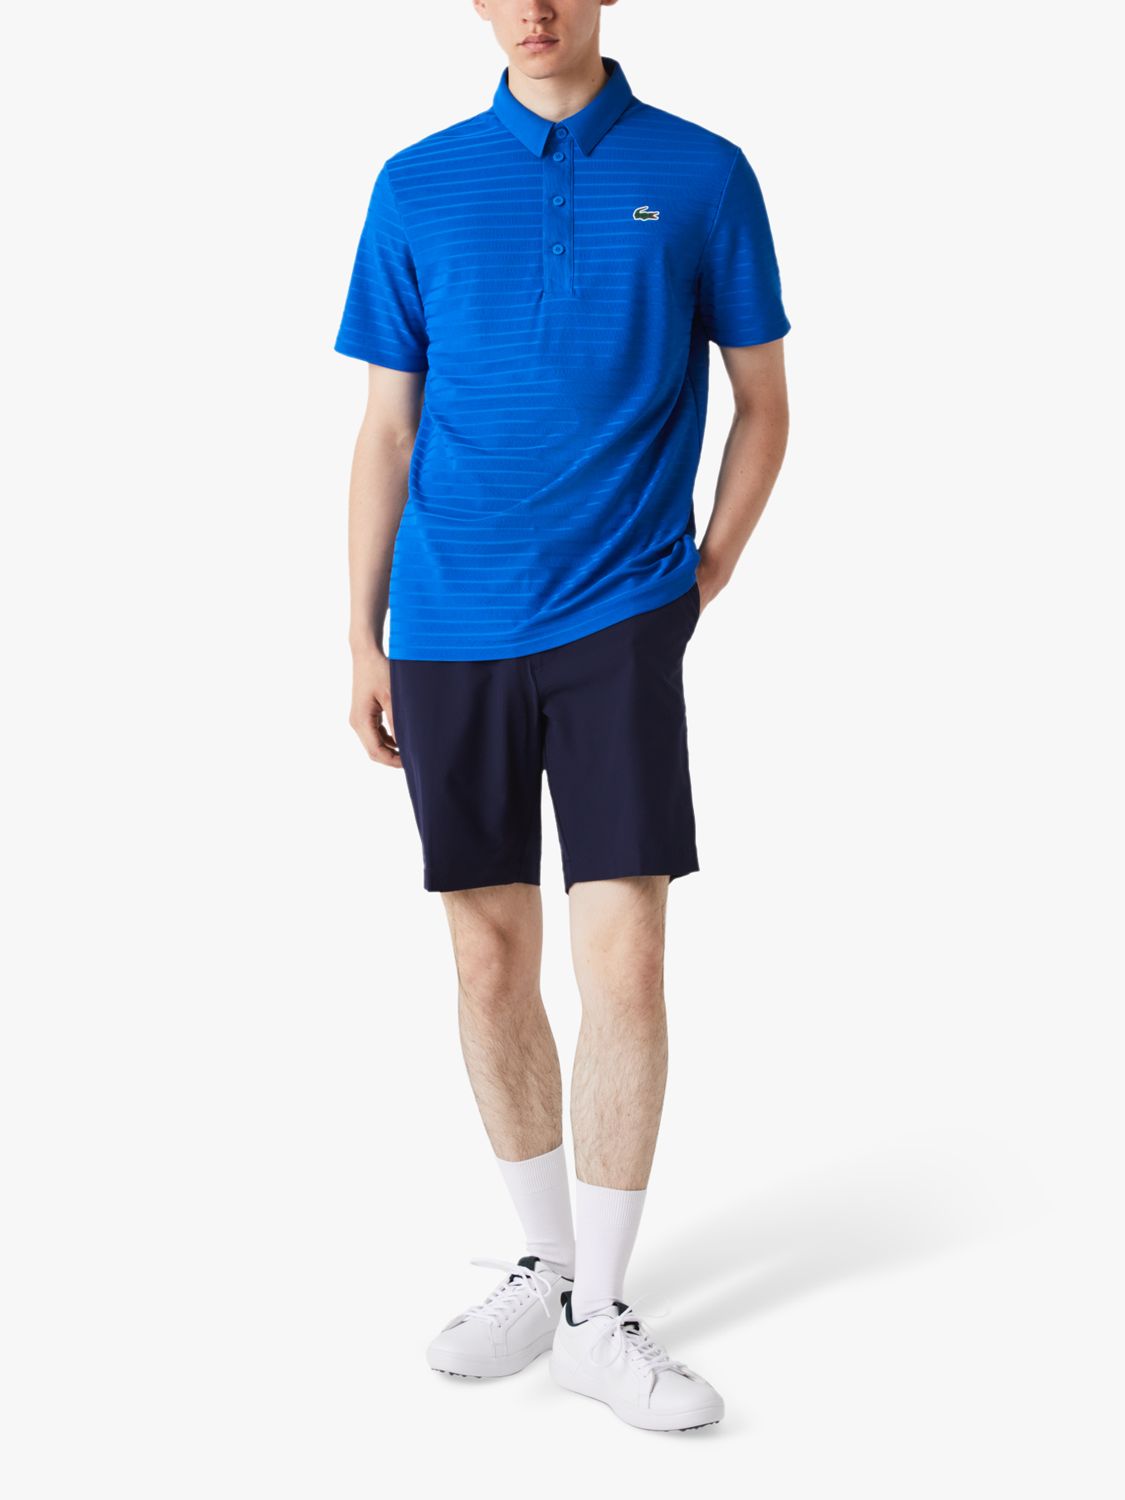 Lacoste Golf Stripe Textured Polo Shirt, K1q, S